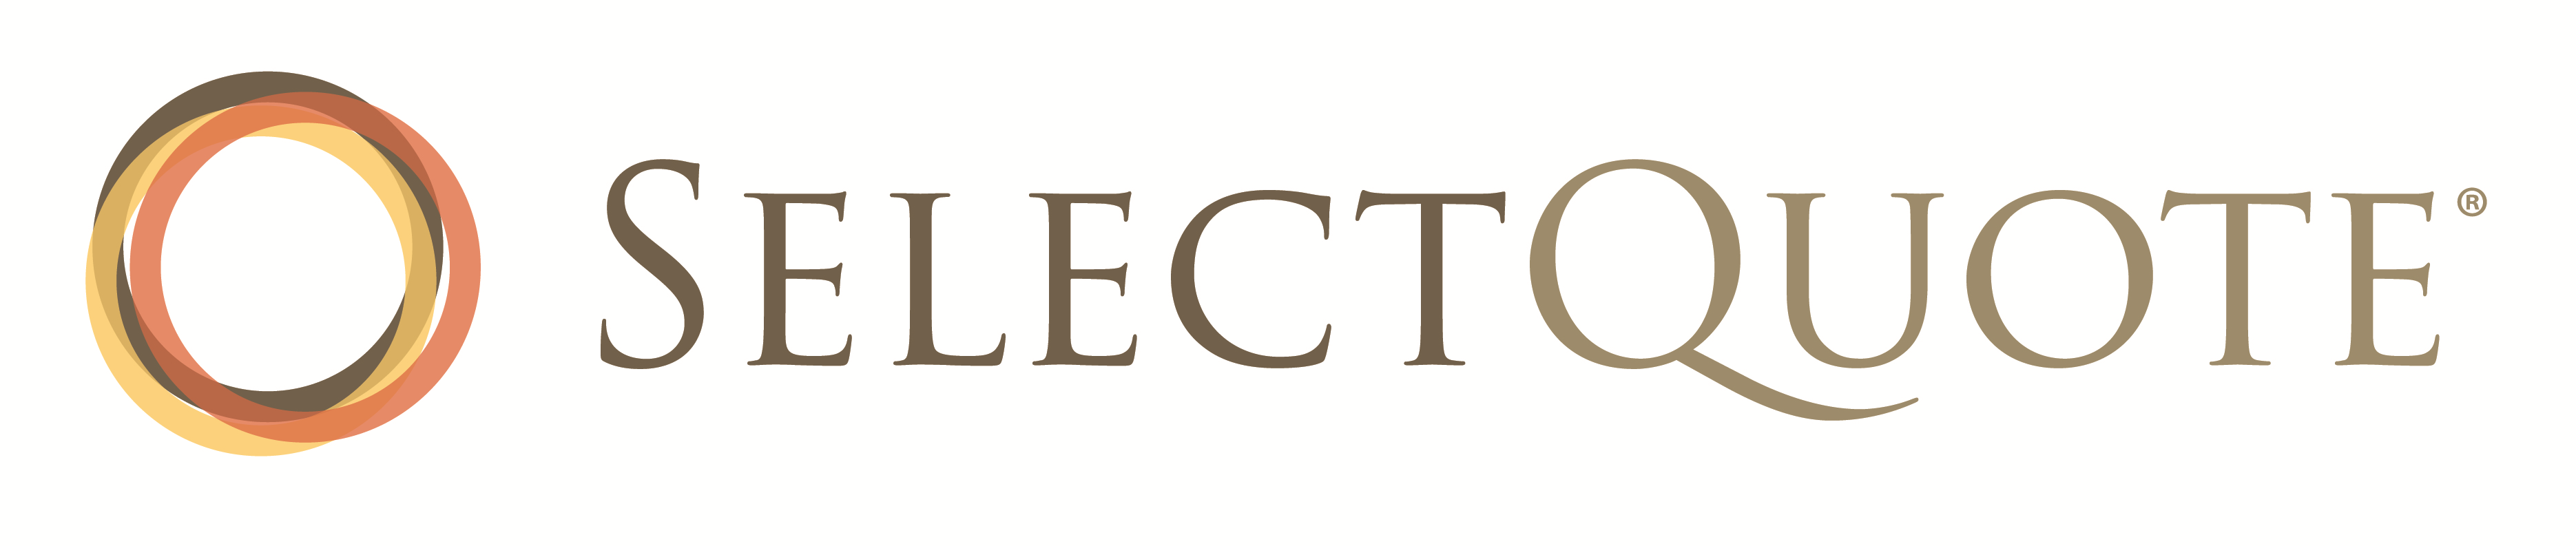 SelectQuote Insurance Services logo